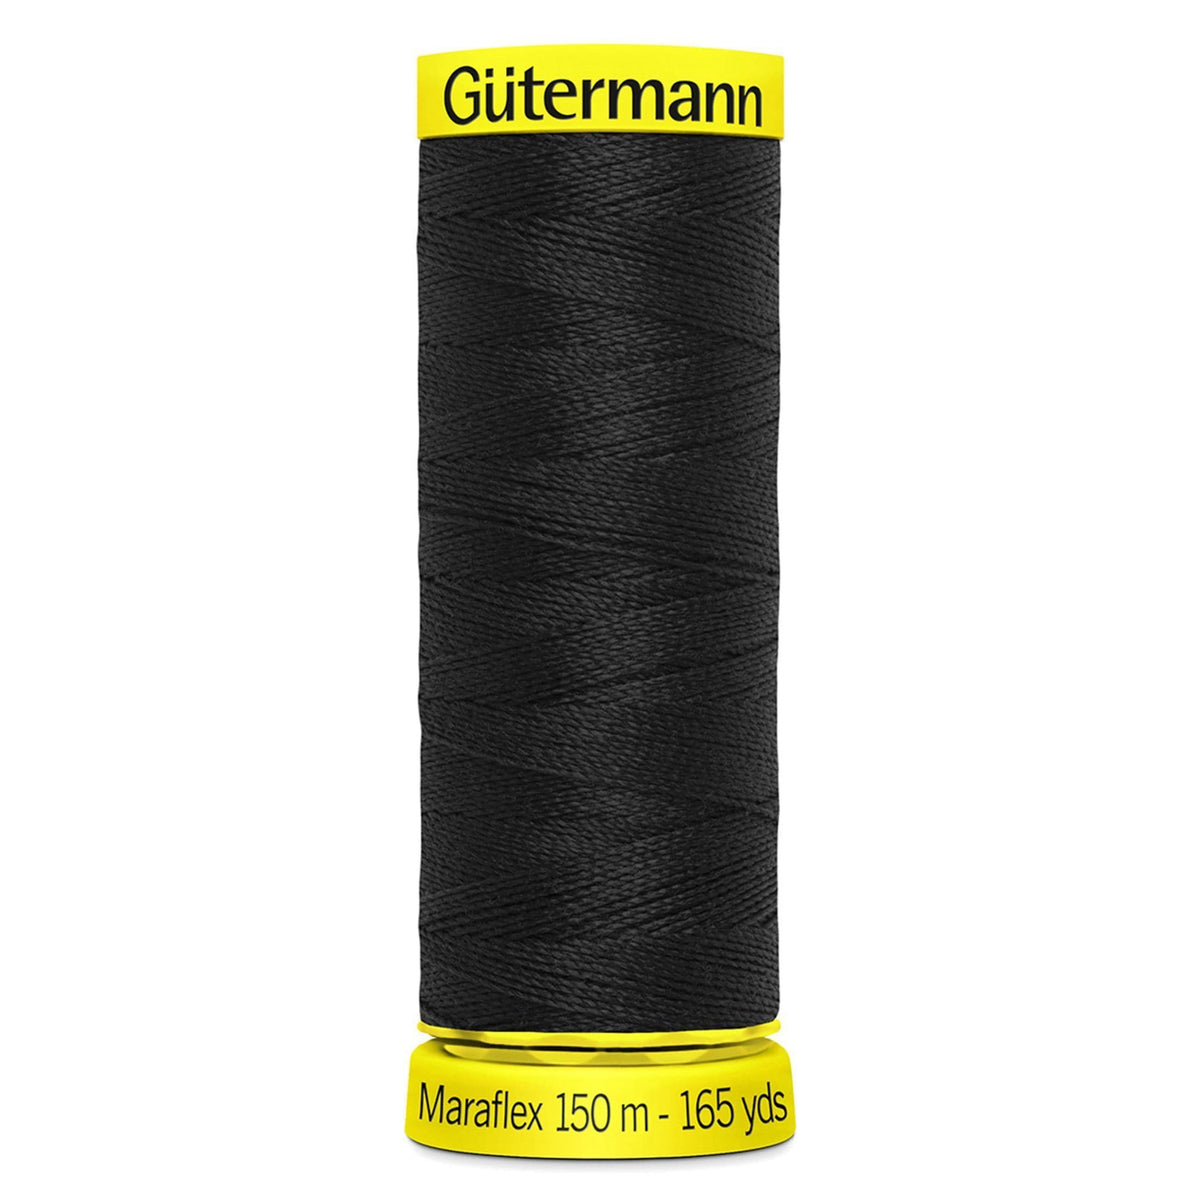 Gutermann Maraflex - Black 500m - Sewing machine Stretch Thread